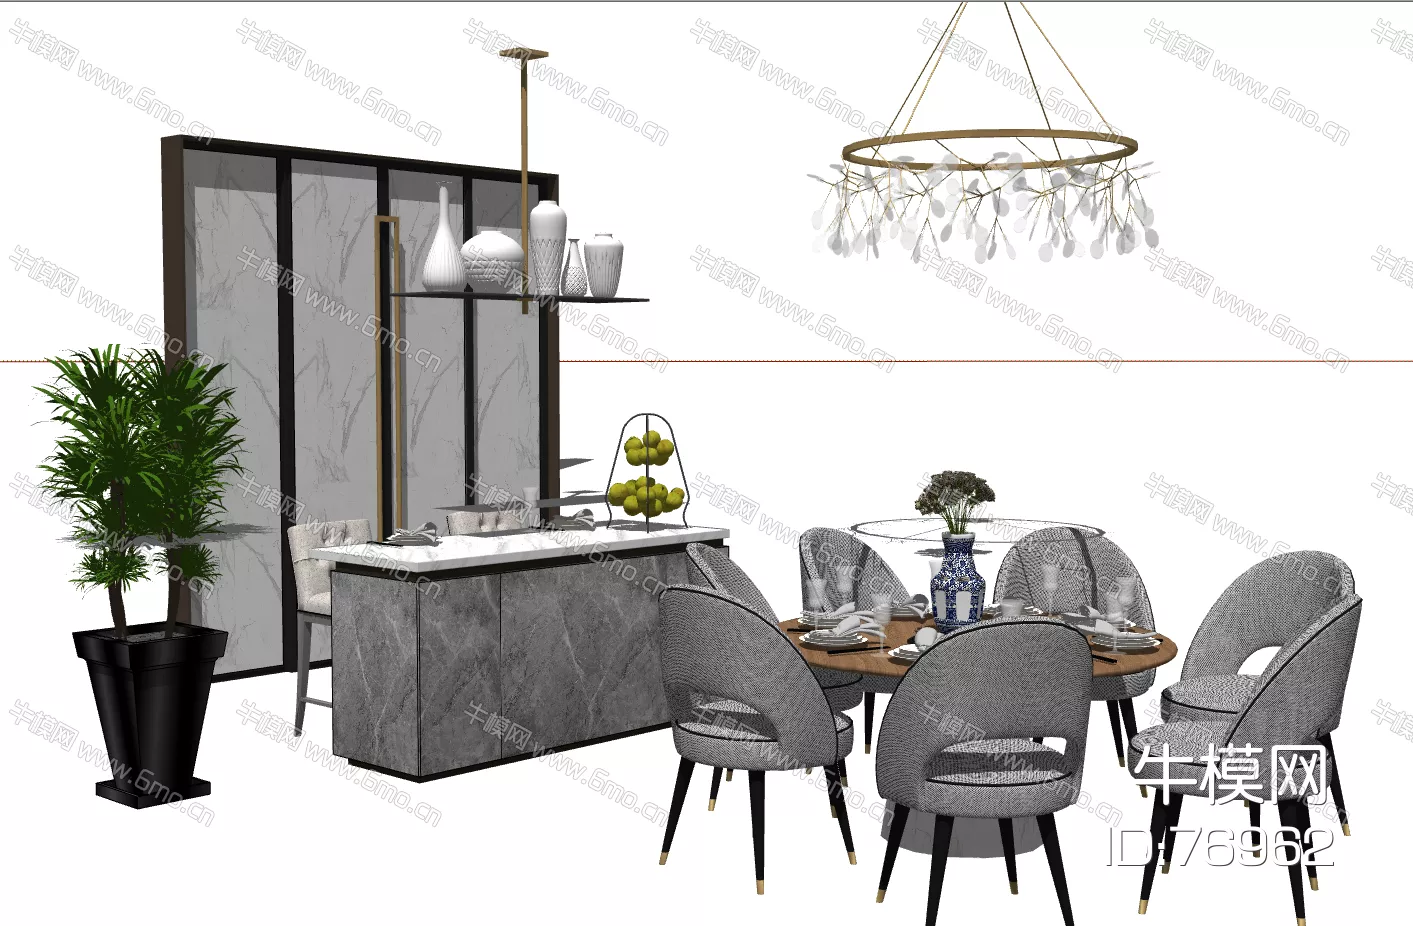 NORDIC DINING TABLE SET - SKETCHUP 3D MODEL - ENSCAPE - 76962